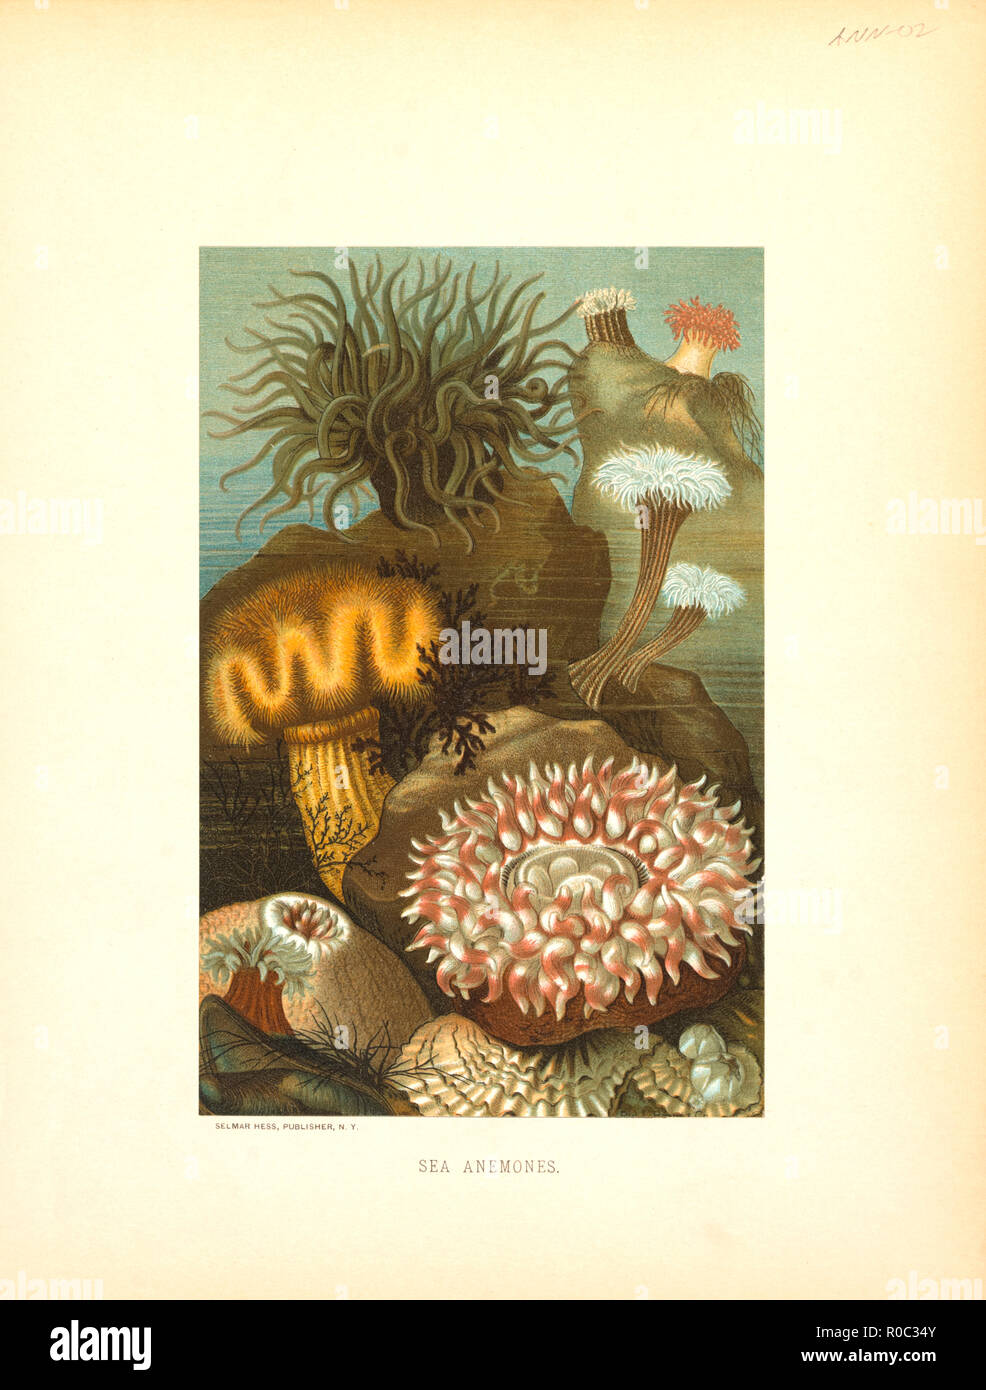 Sea Anemones, Selmar Press Publisher, NY, 1898 Stock Photo